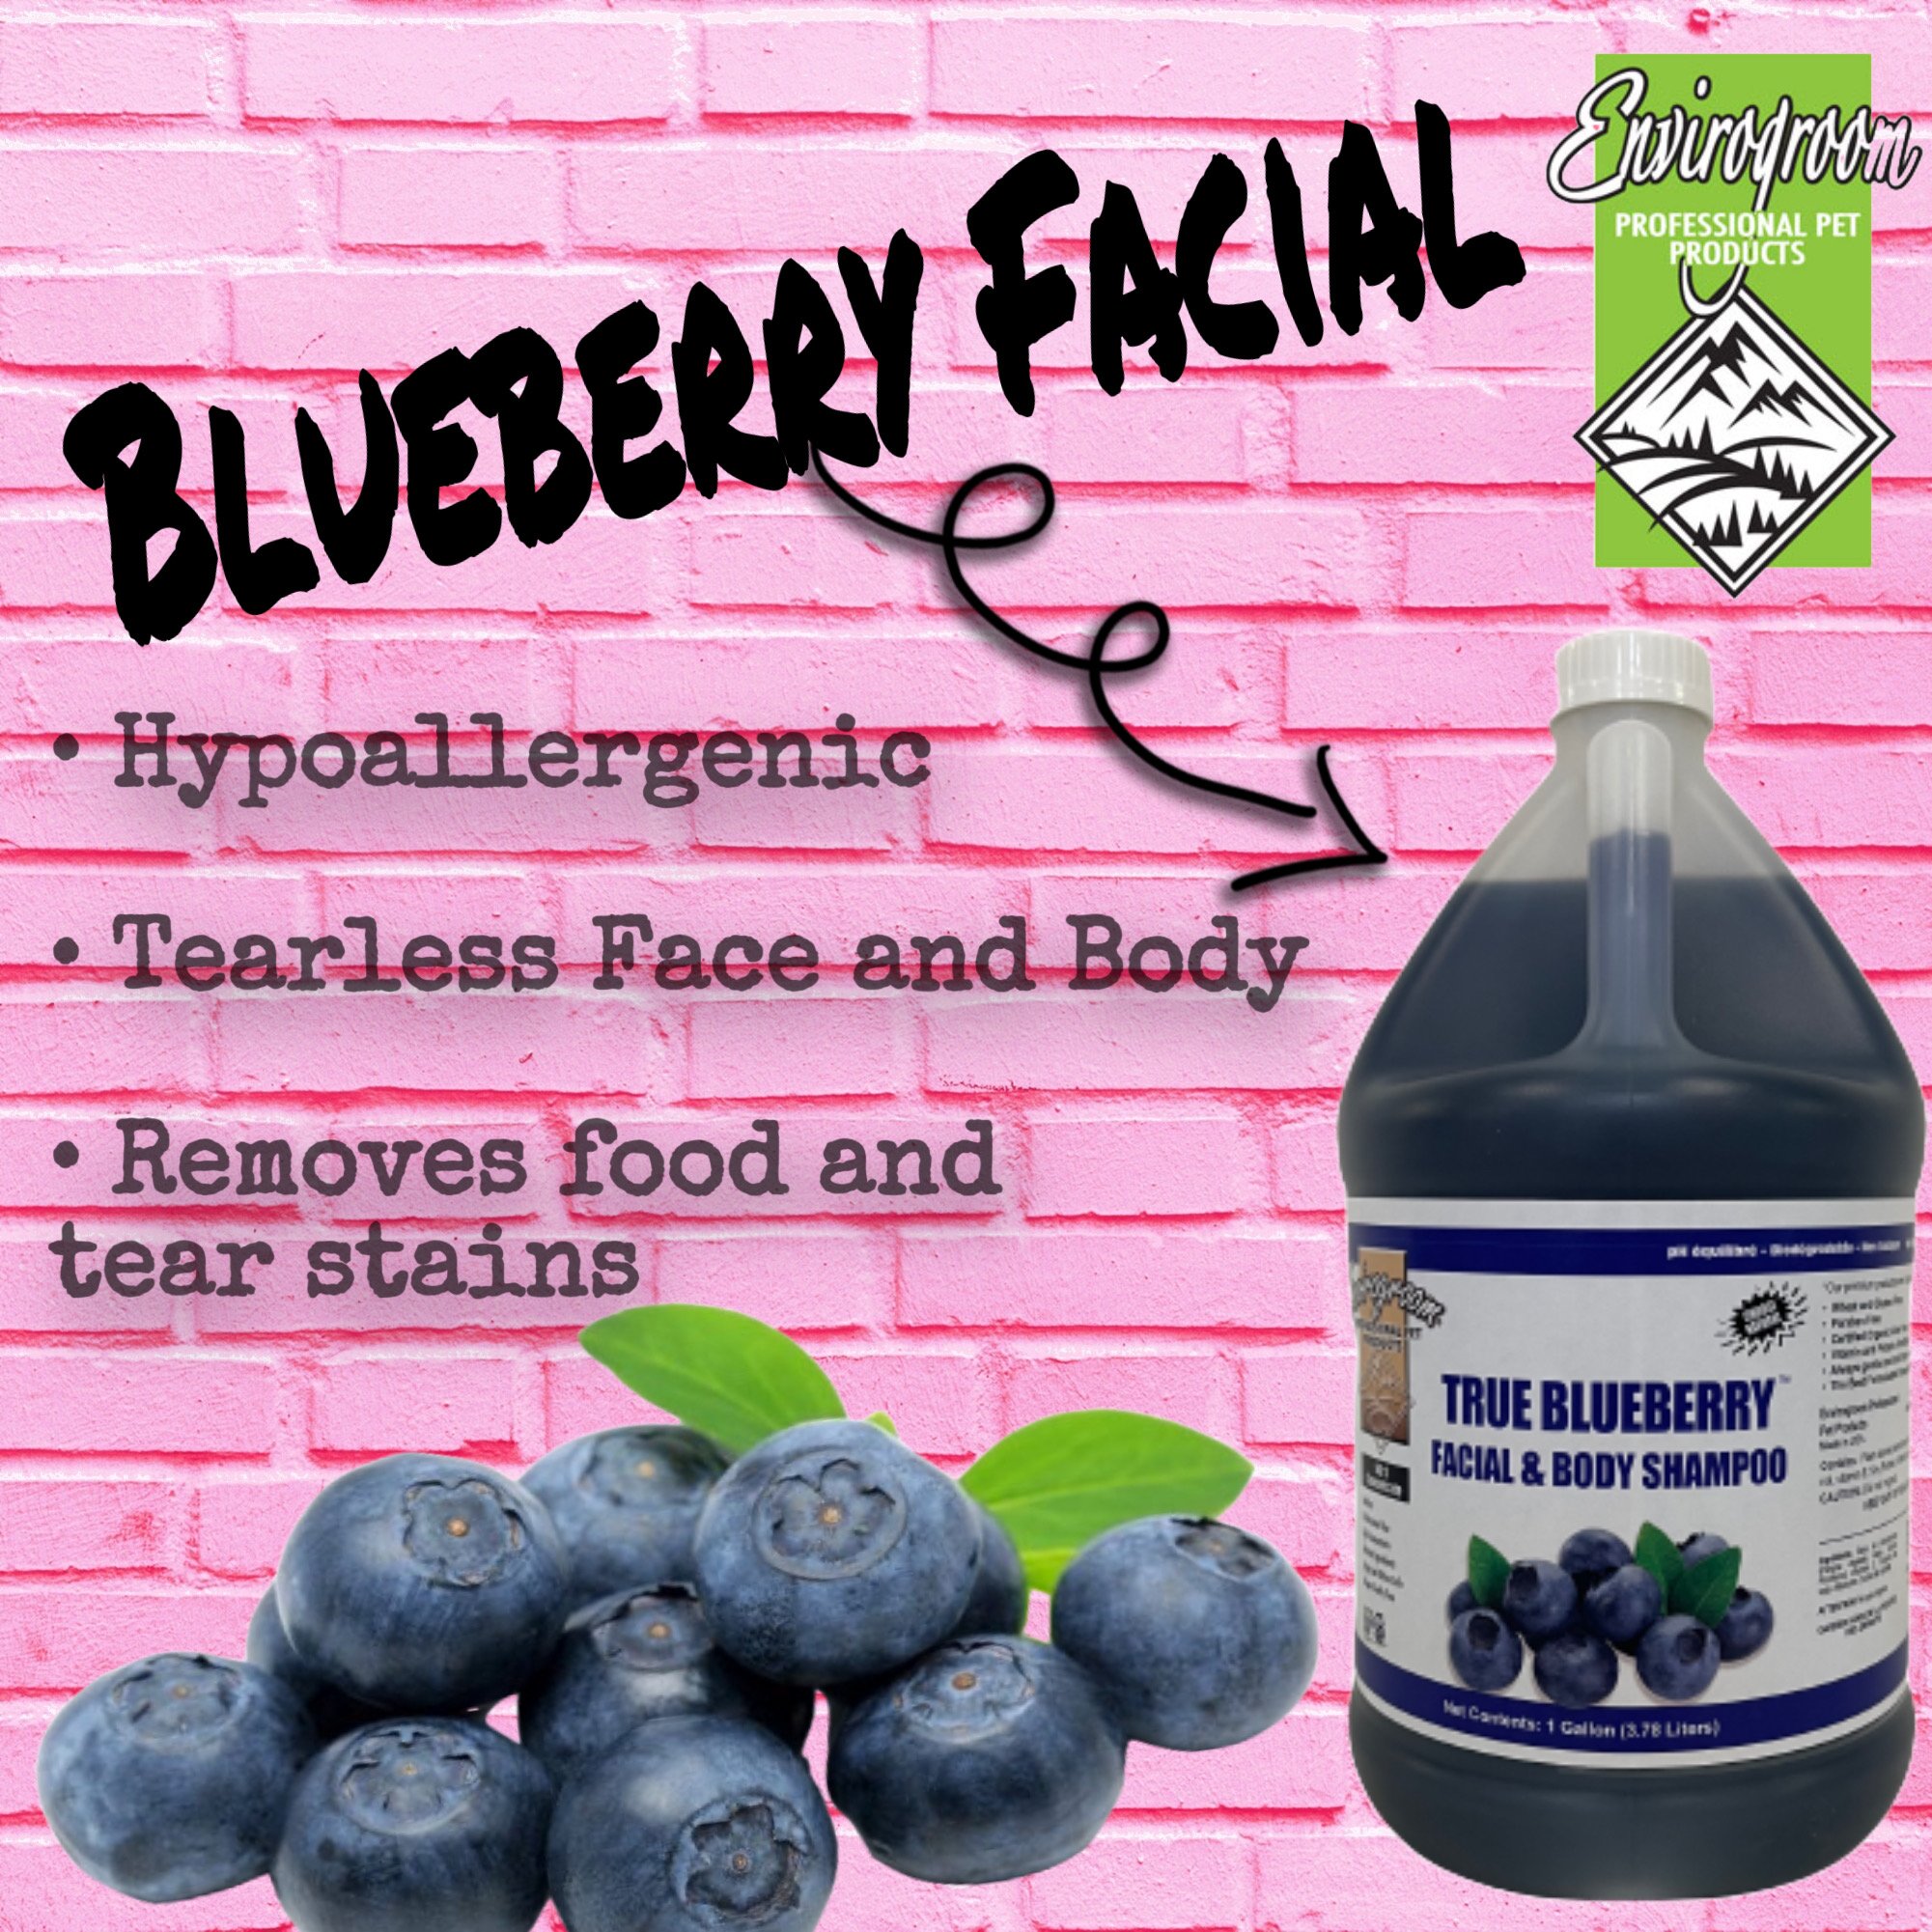 True Blueberry Website.JPEG